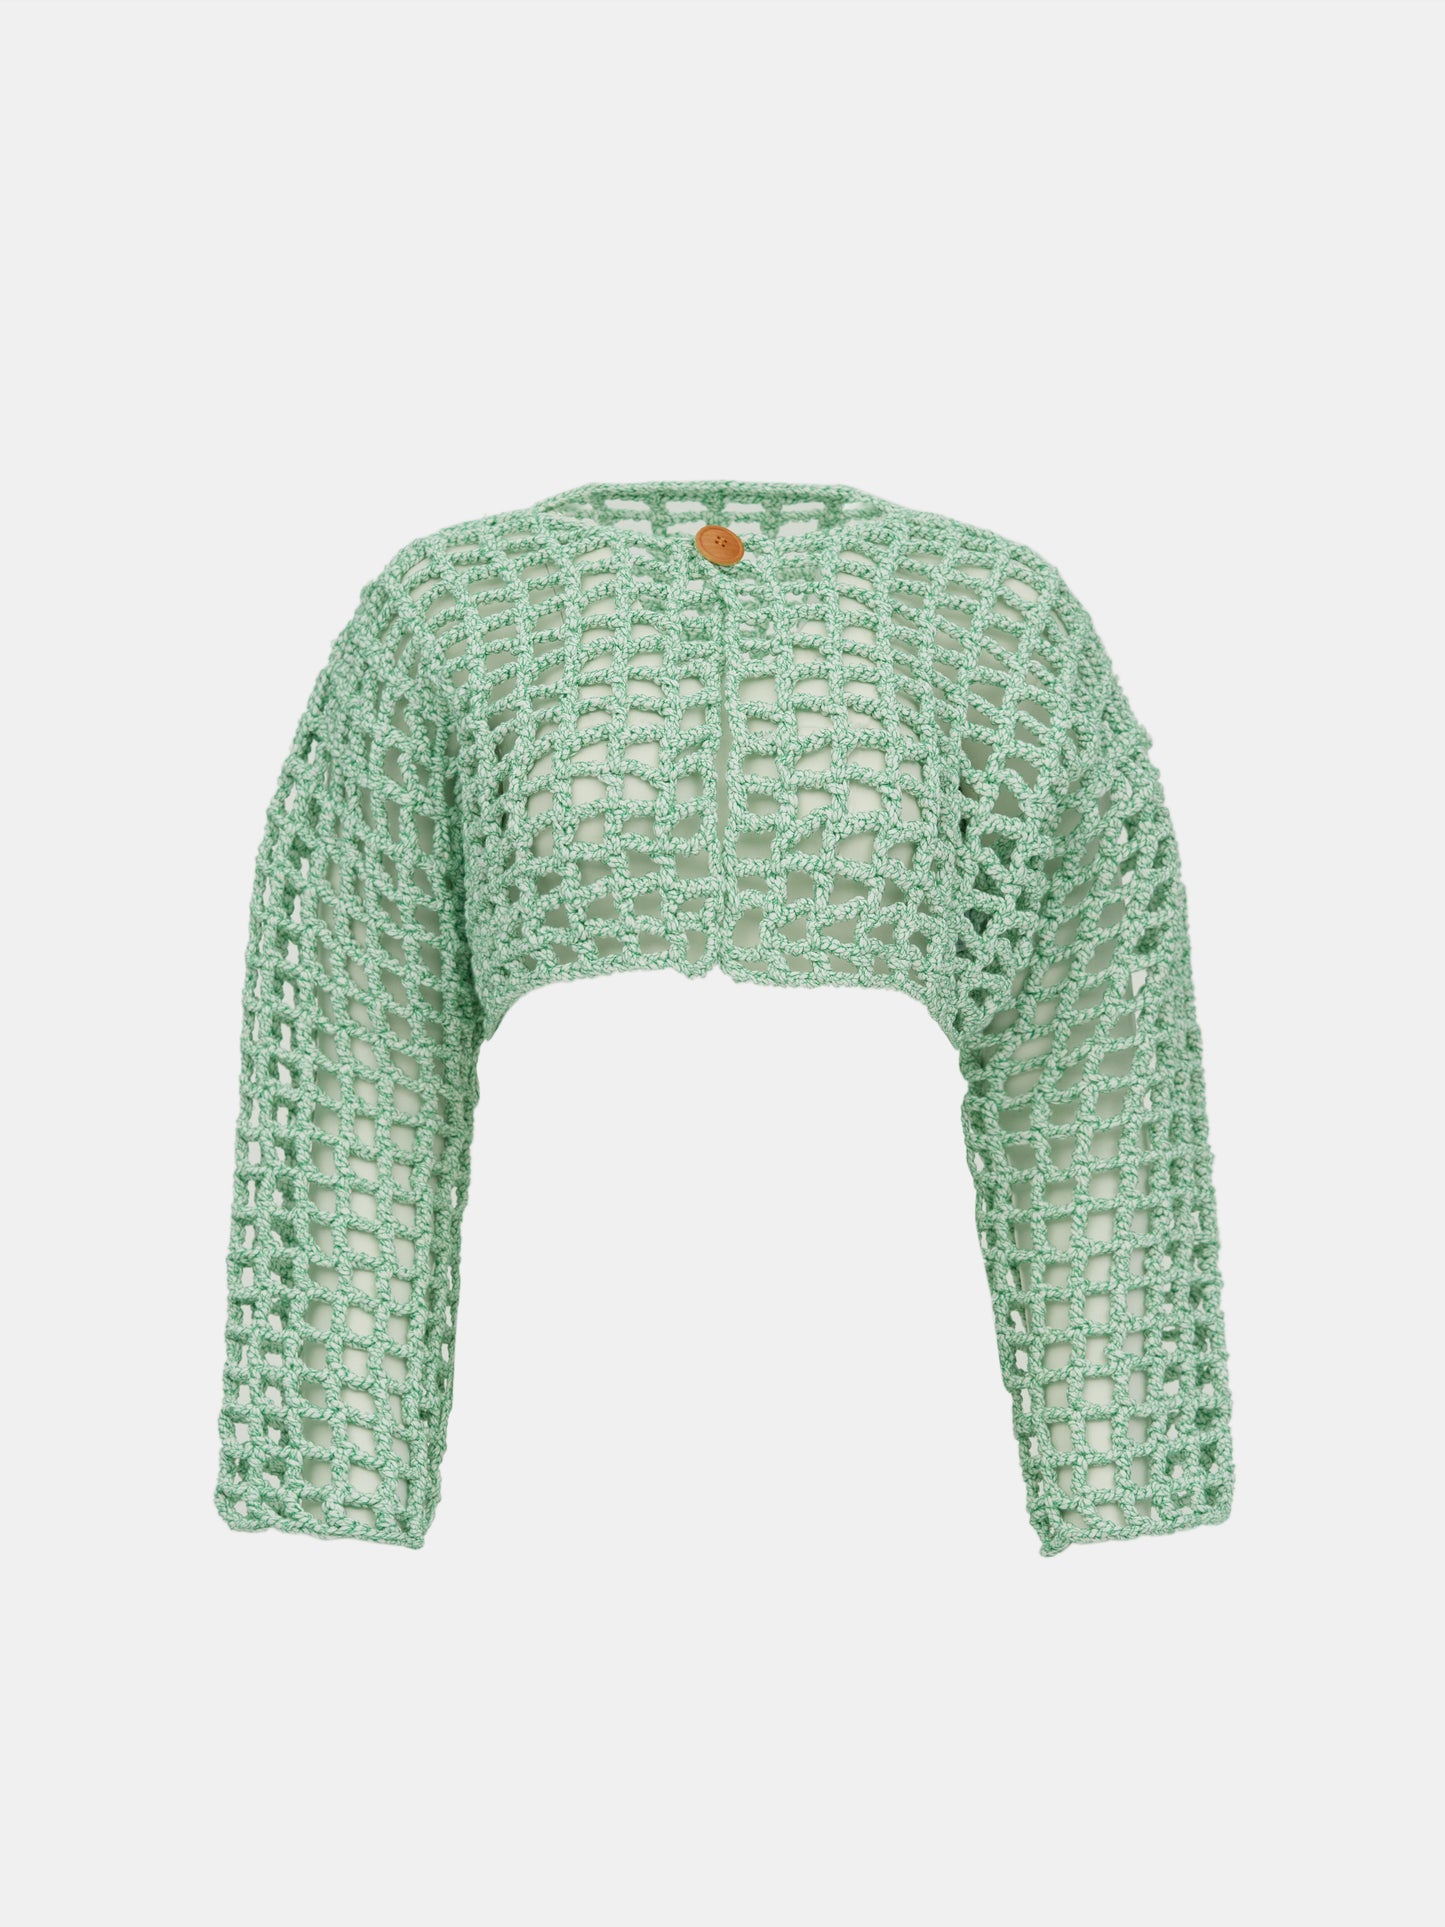 Cotton Crochet Cardigan, Seafoam